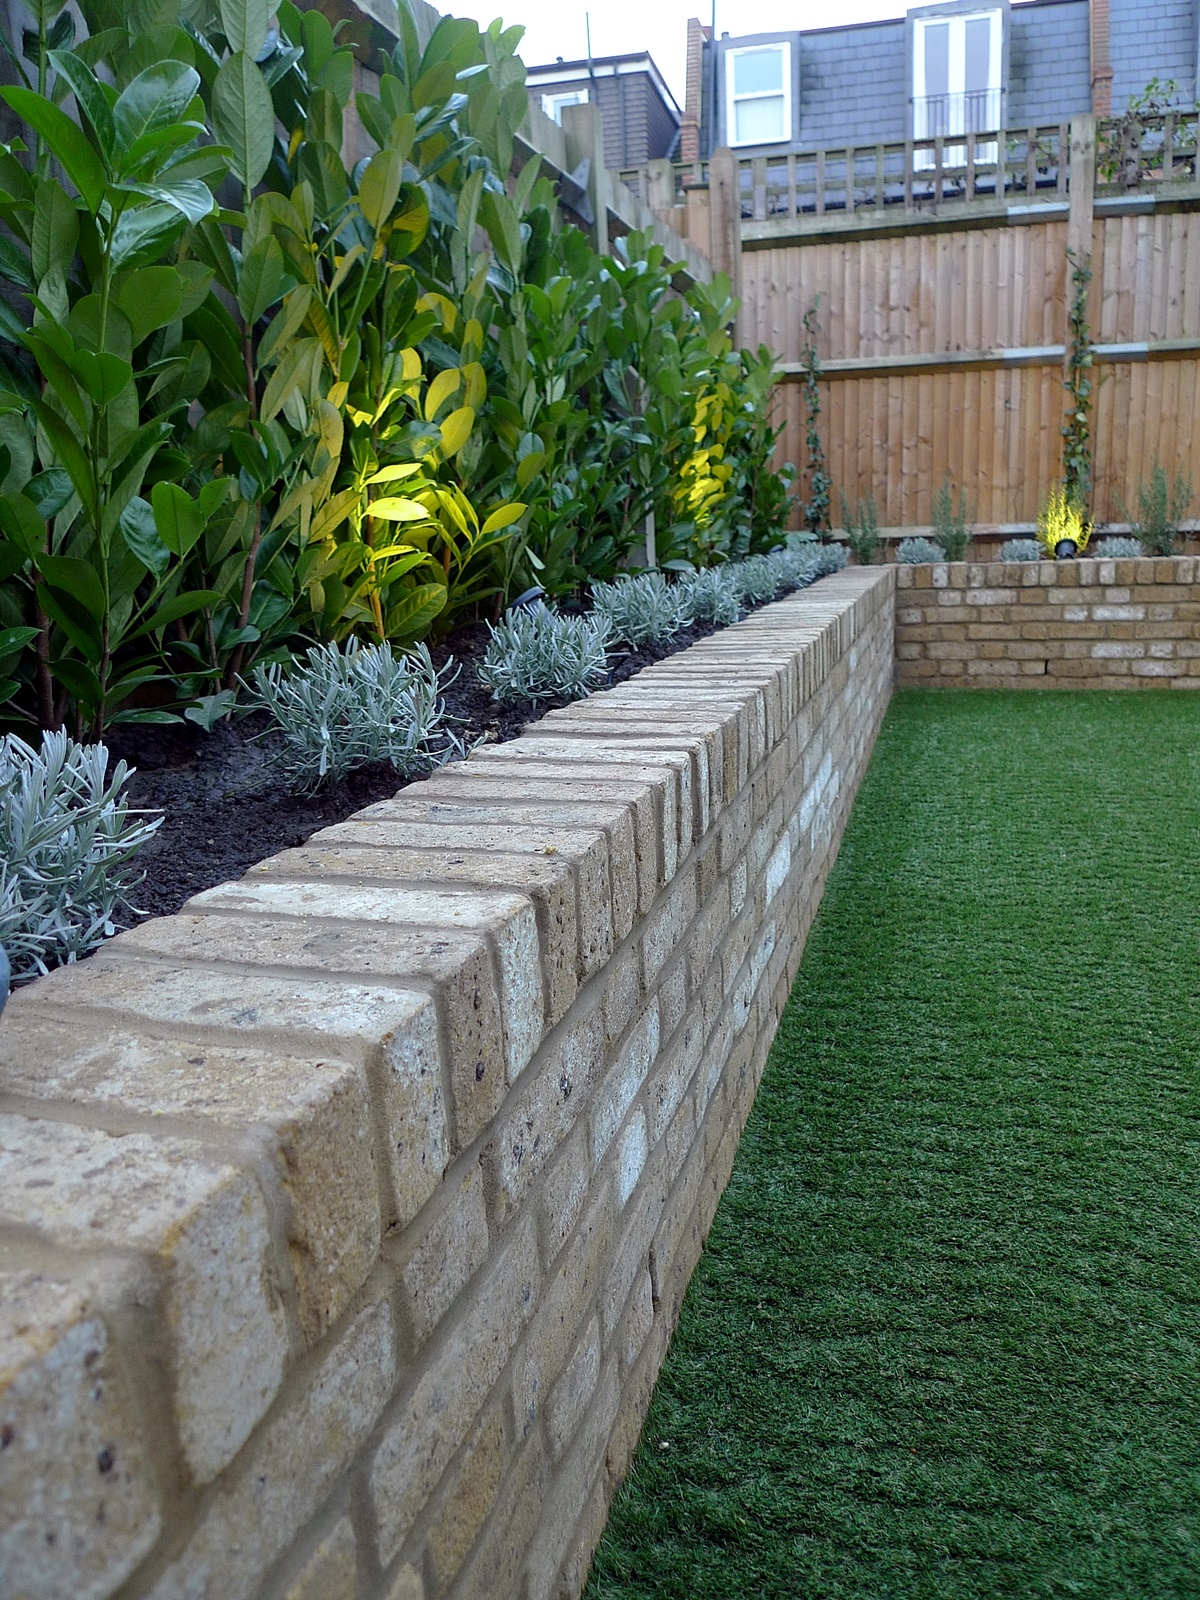  brick garden wall designs